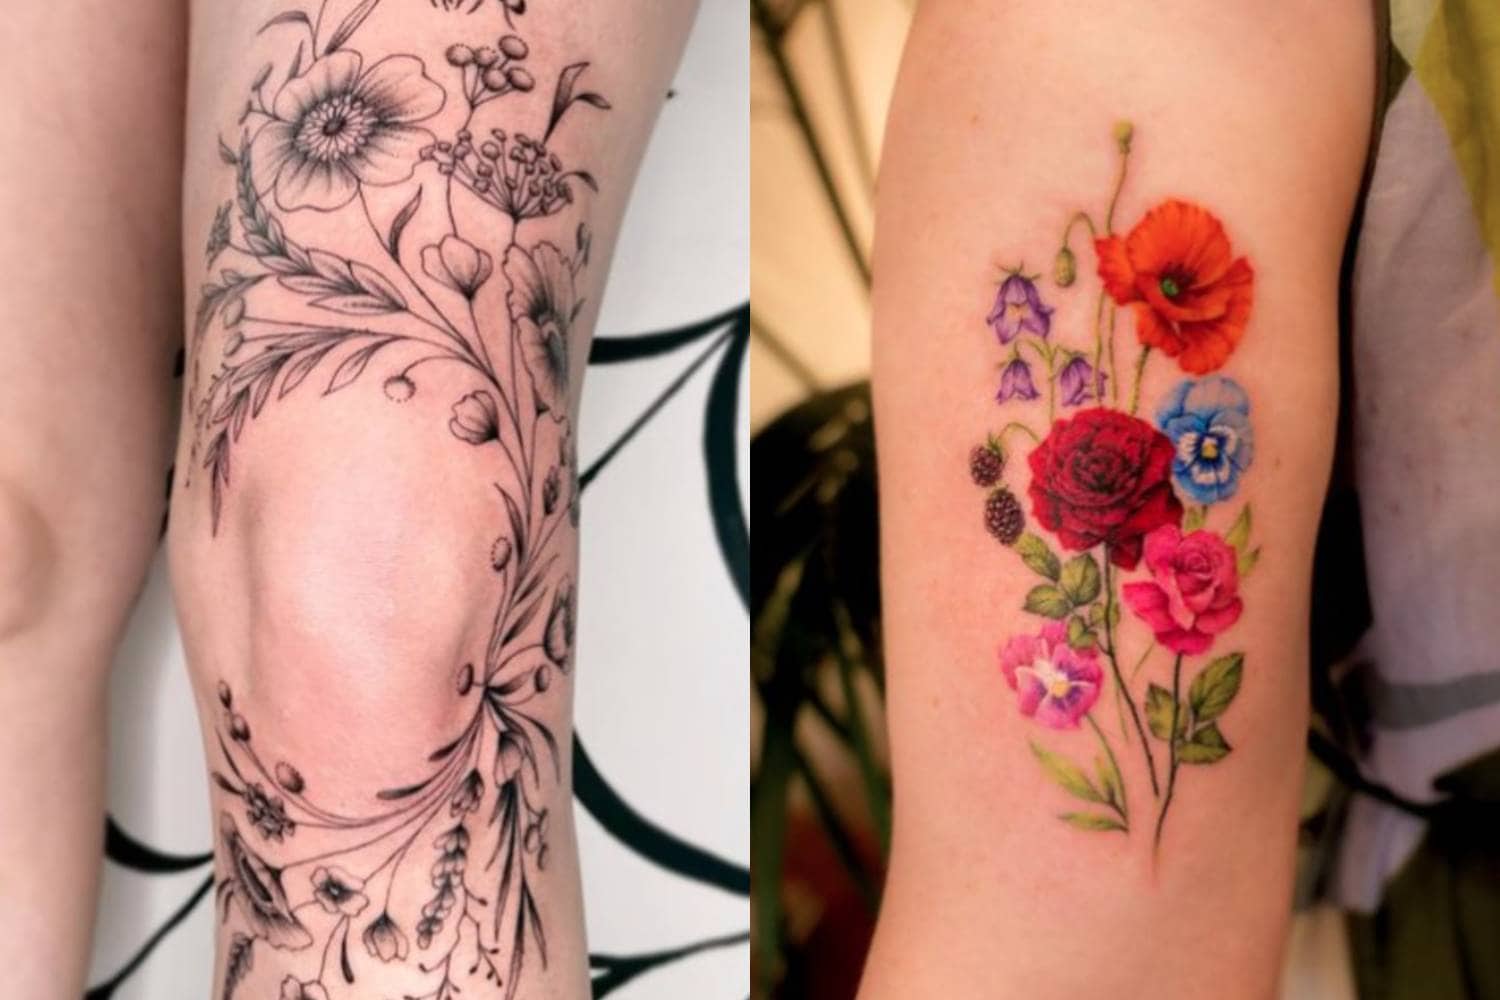 Small daisy tattoo on the inner wrist